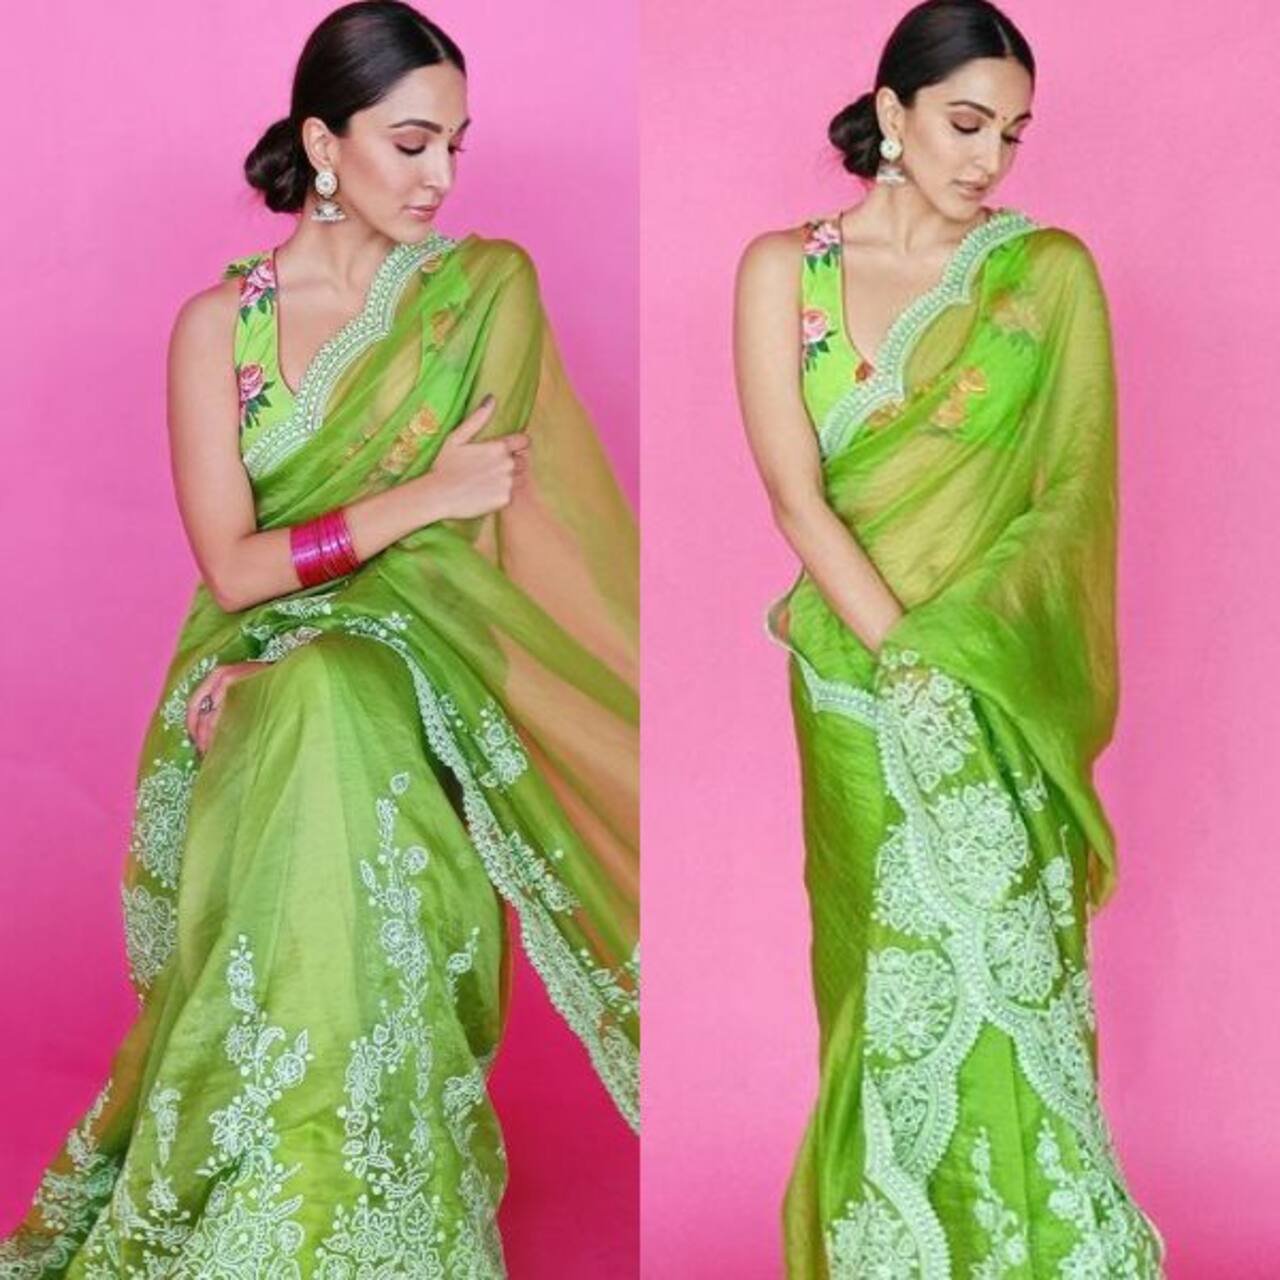 Shershaah actress Kiara Advani's demure look in a green organza saree ...